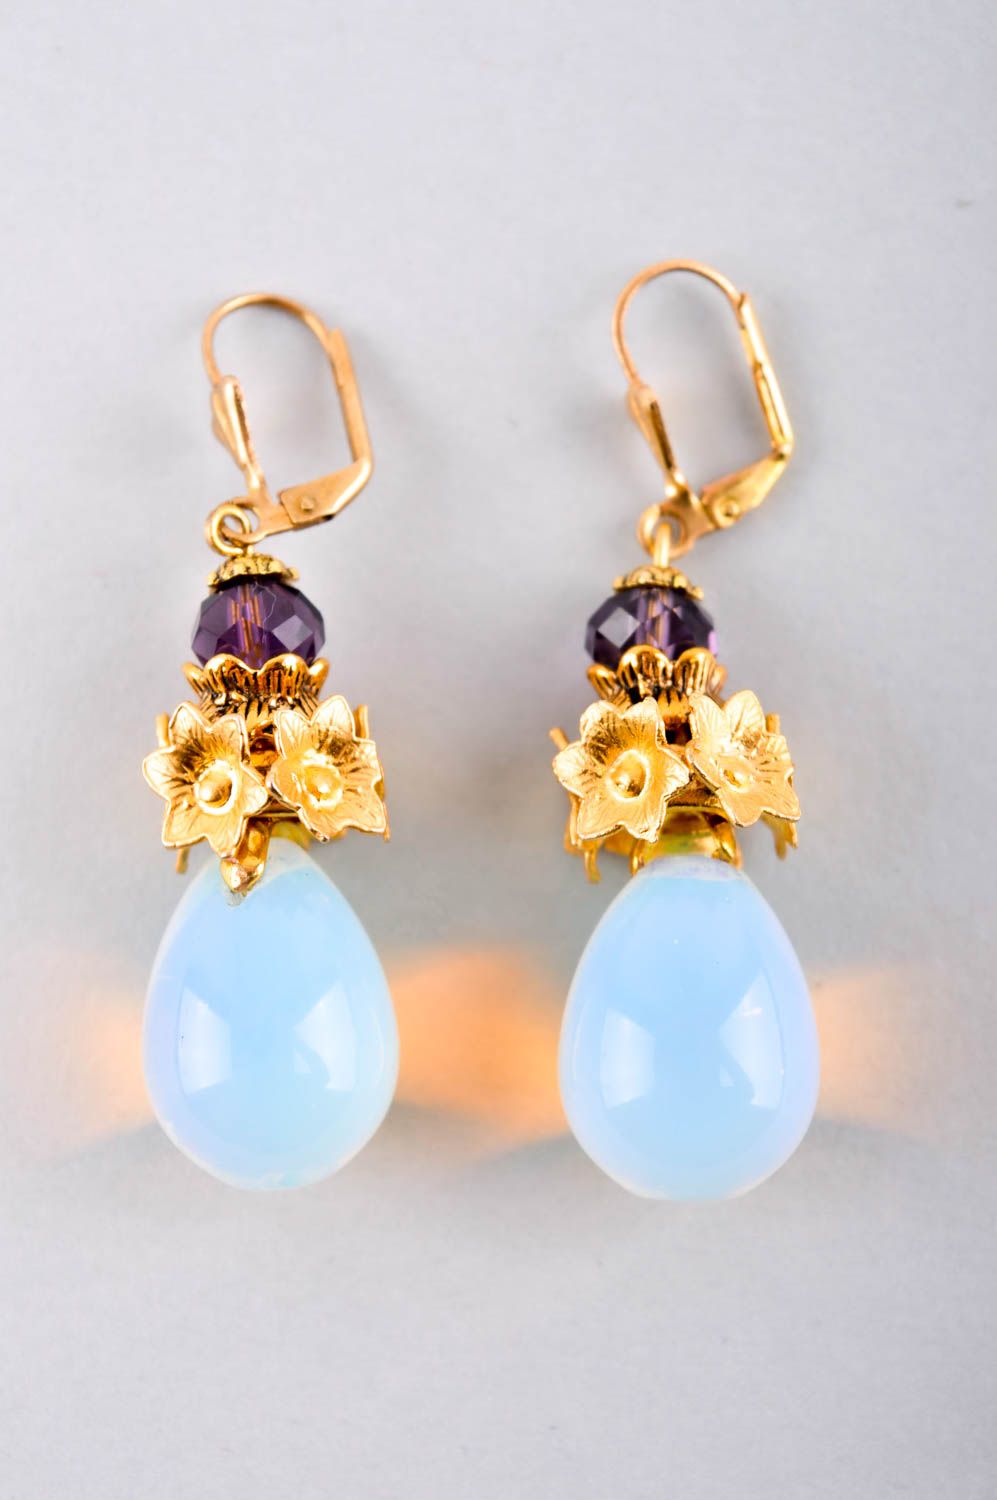 Handmade earrings designer accessory unusual earrings with stones gift ideas photo 3